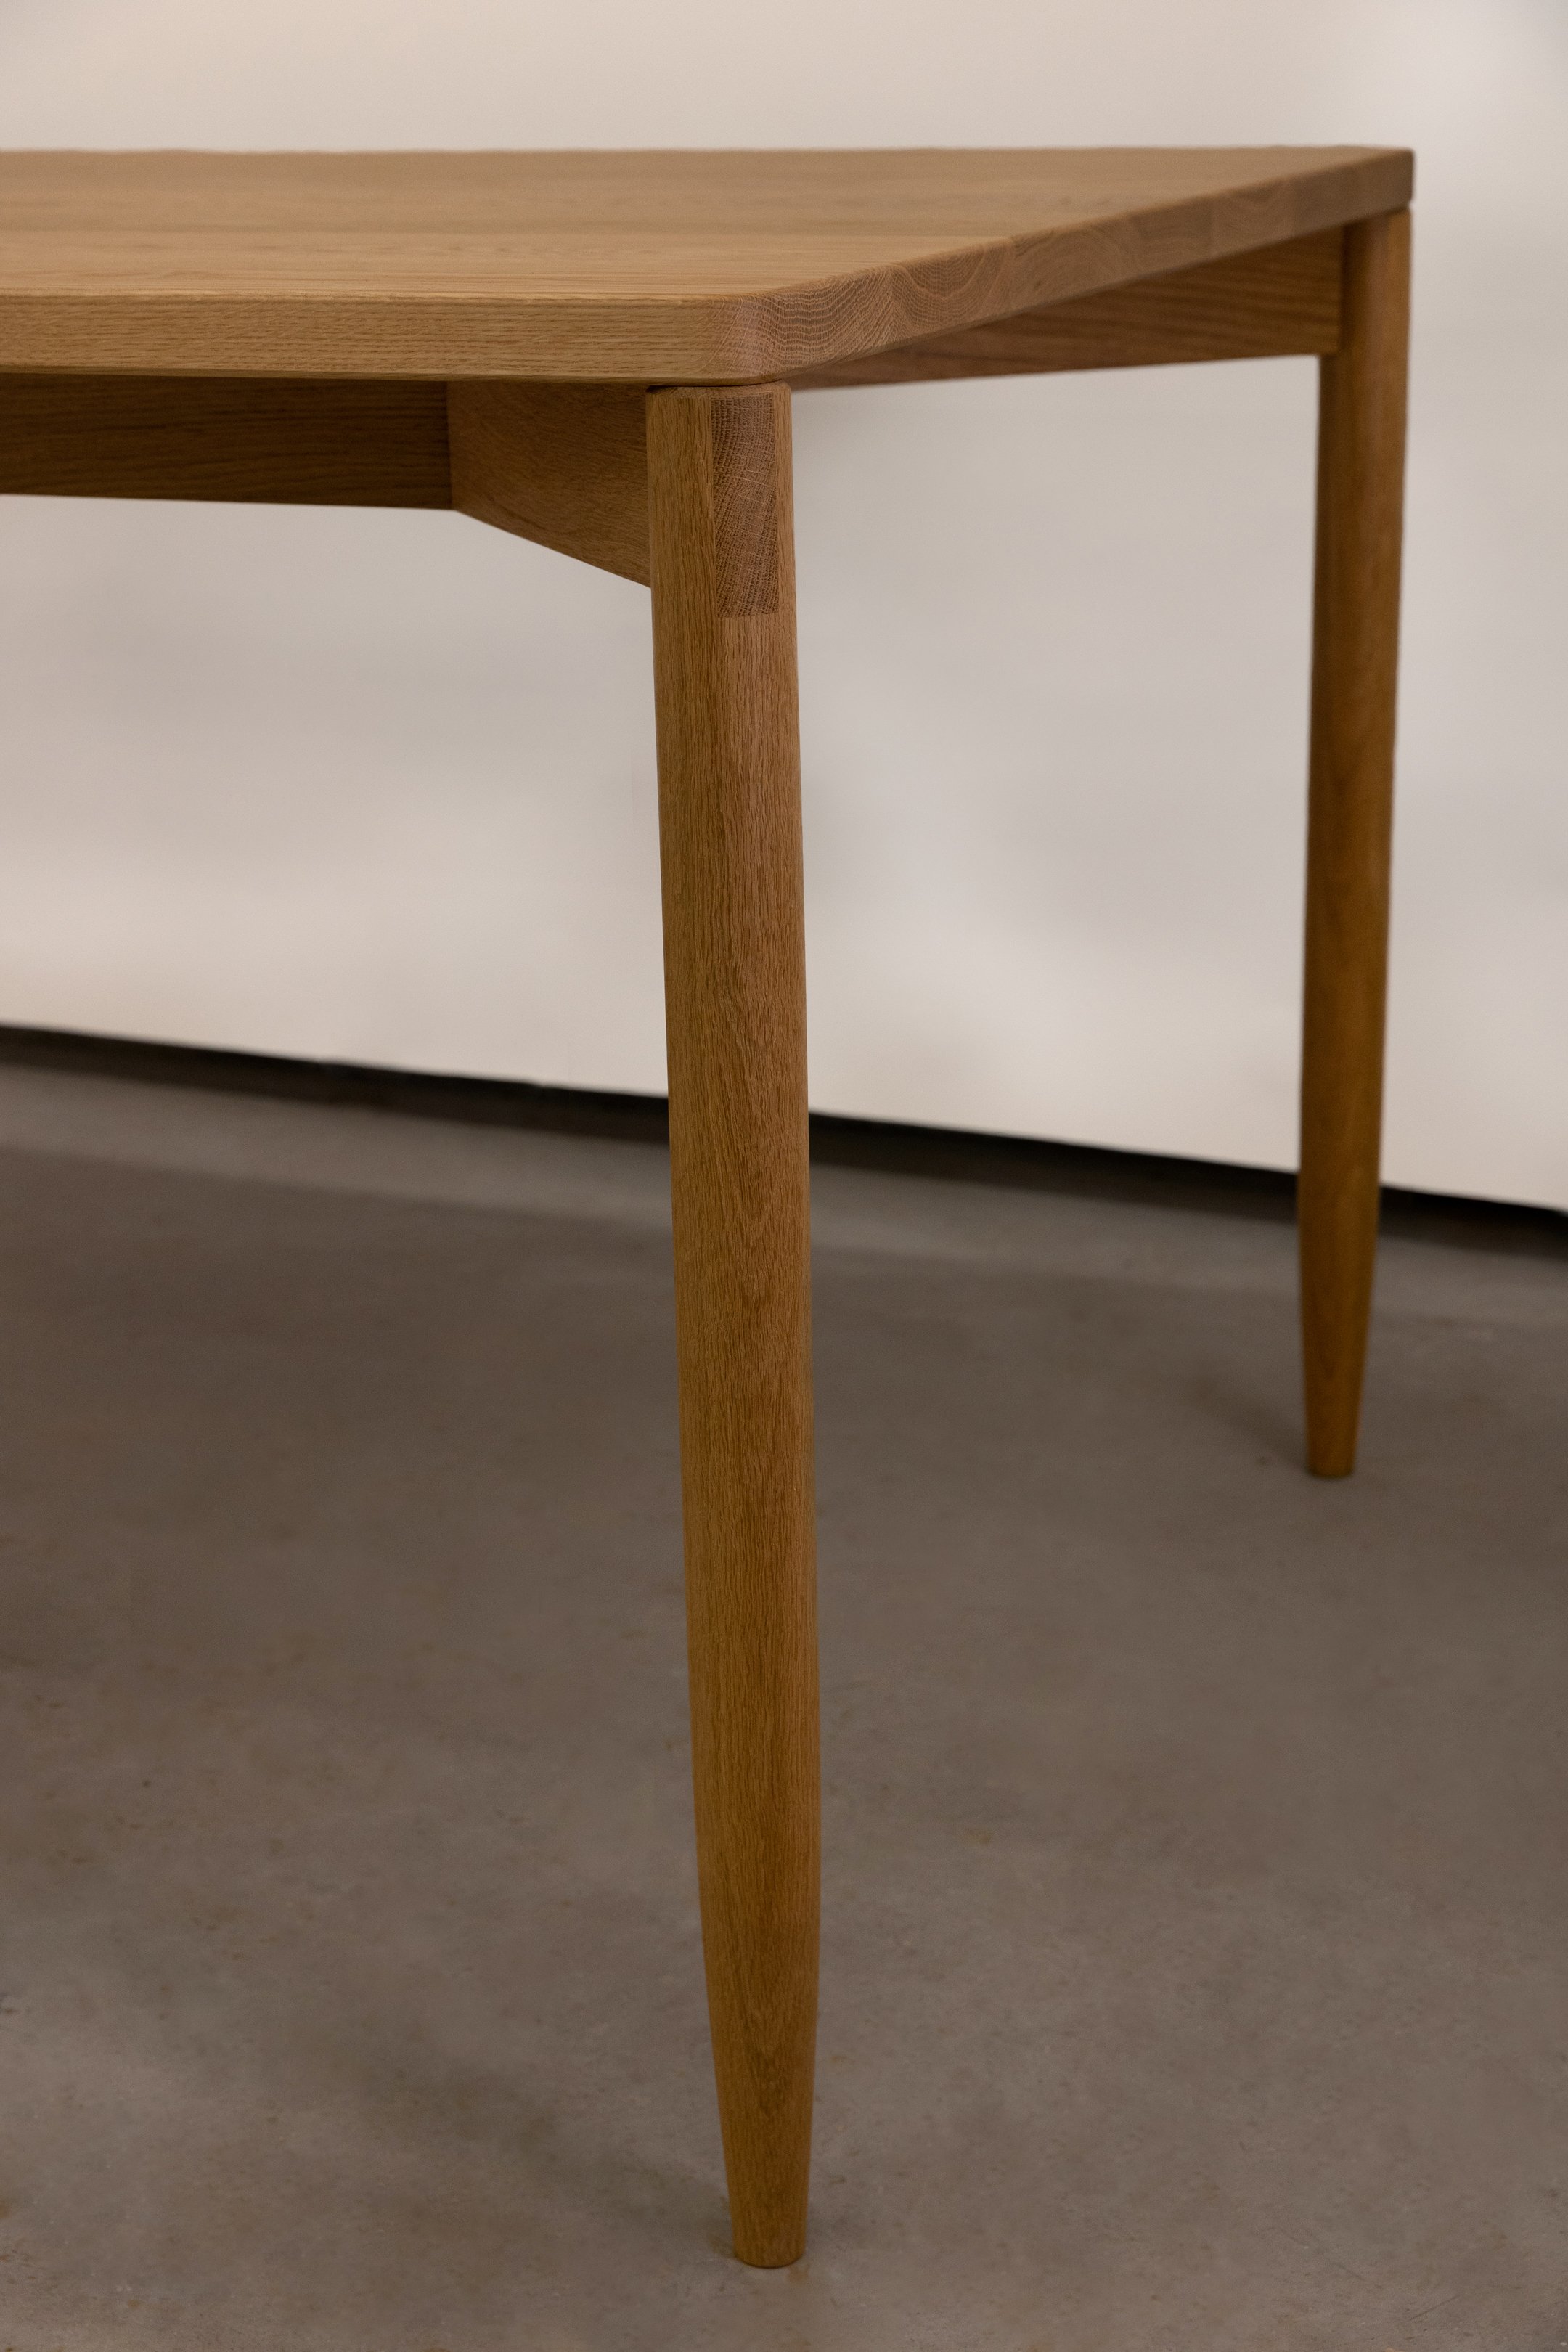 rowe table white oak leg detail (preferred).jpg